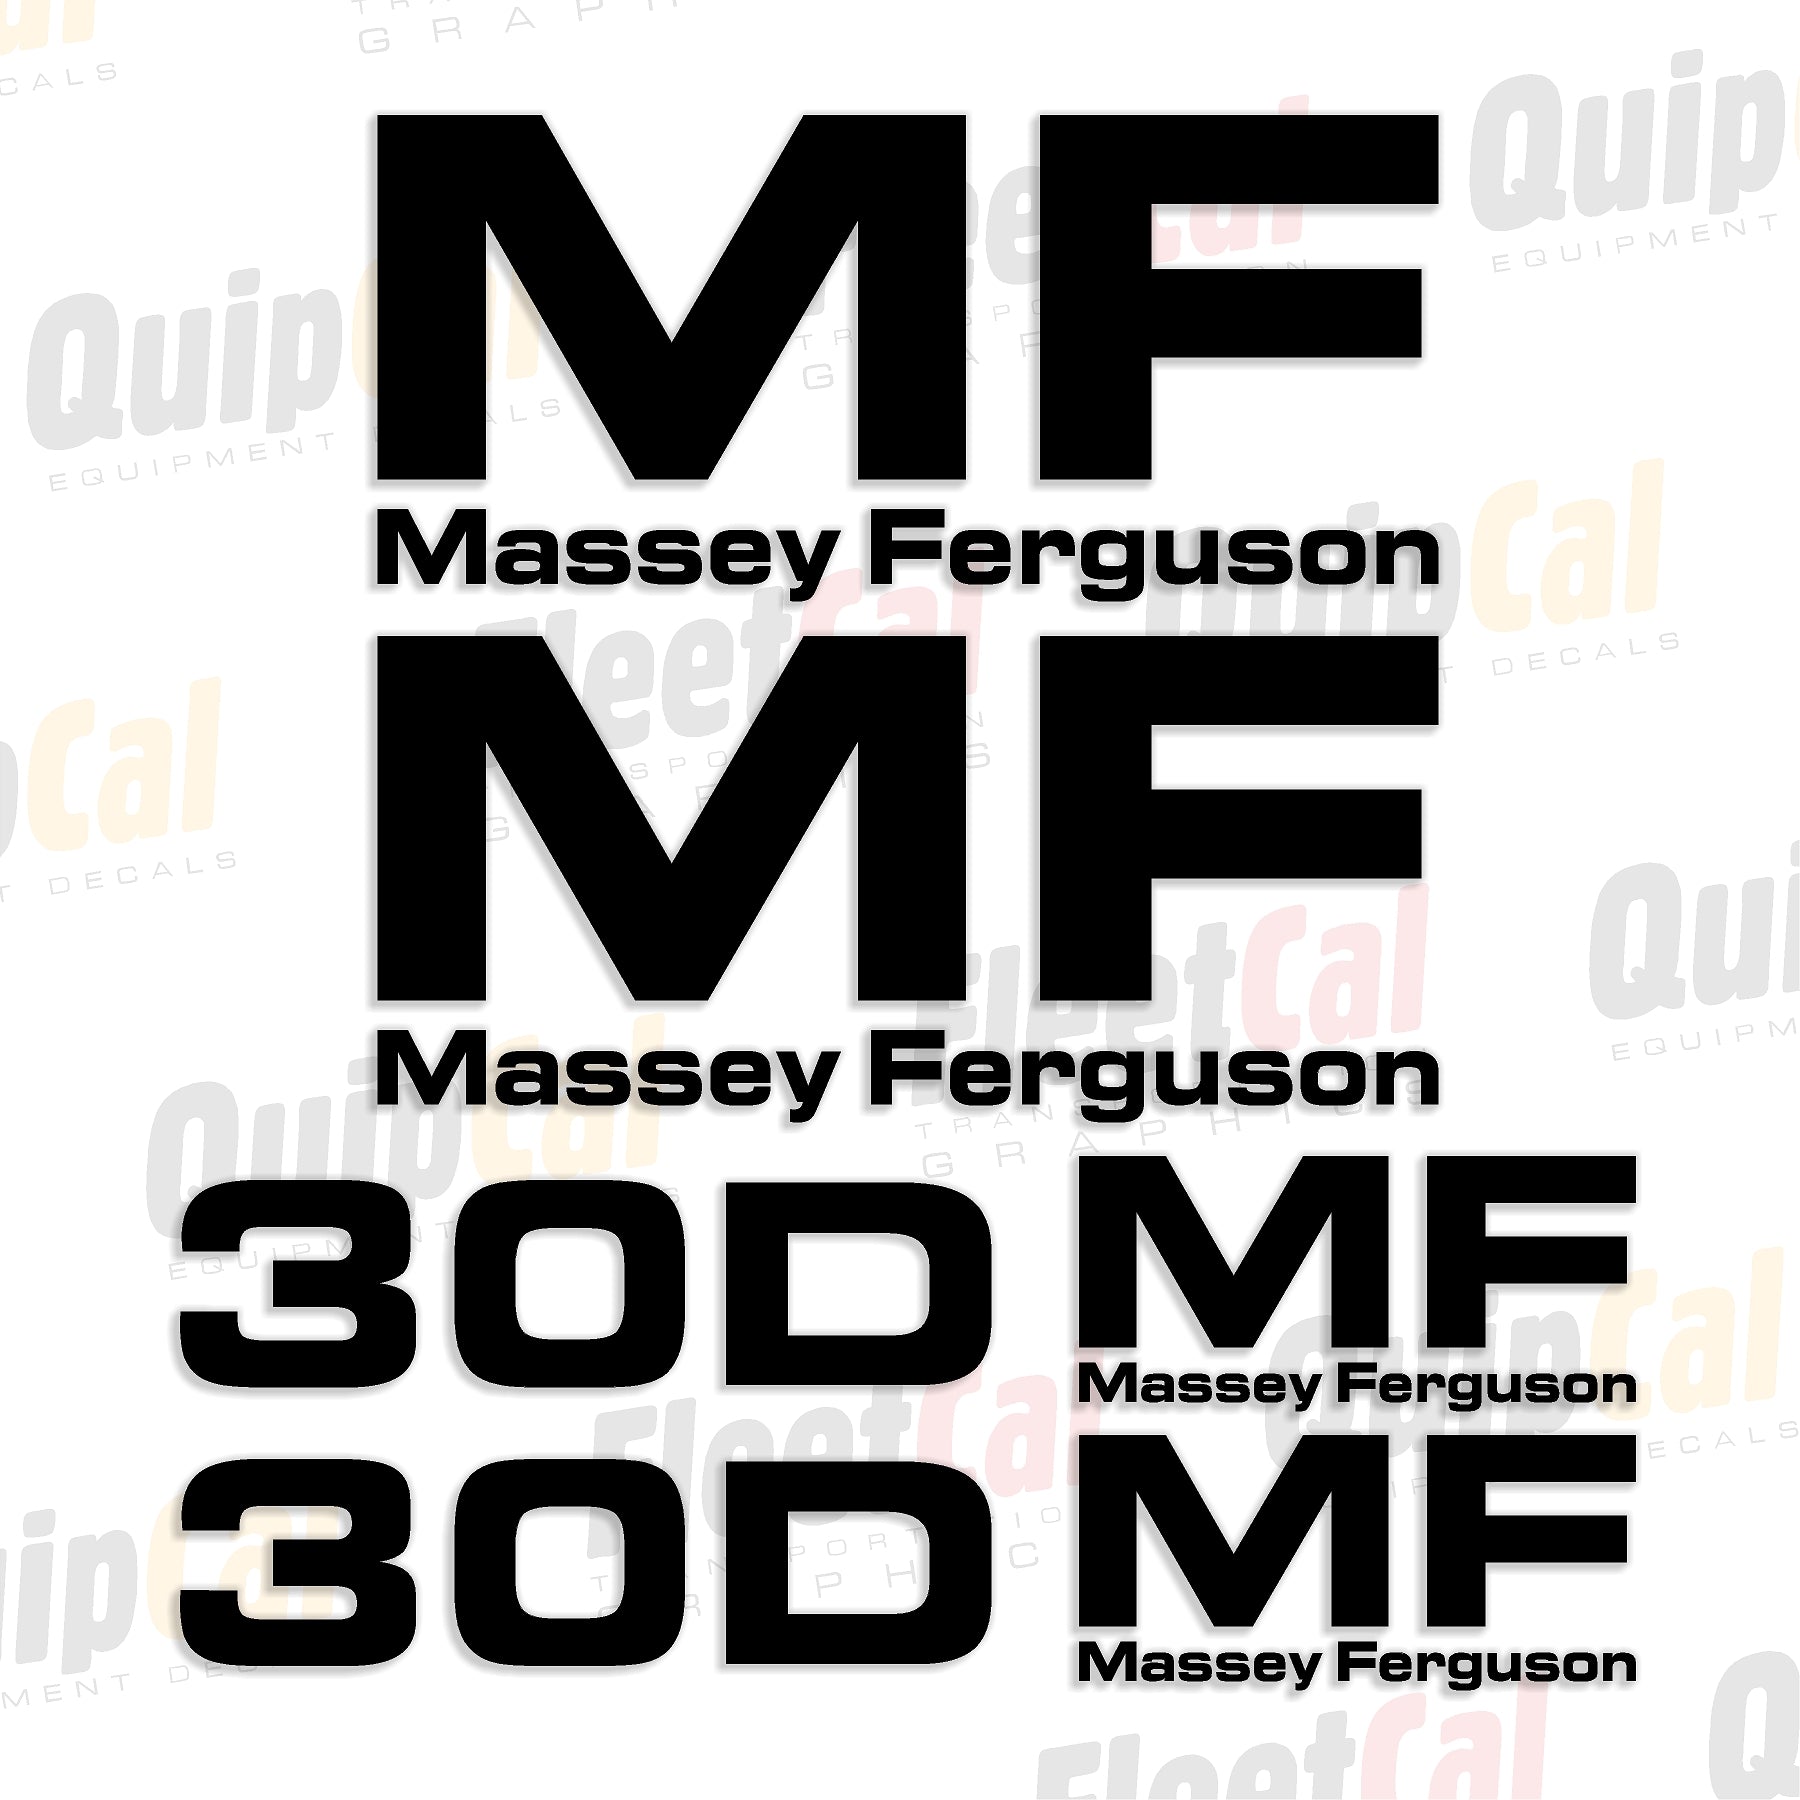 Massey Ferguson Industrial Tractor